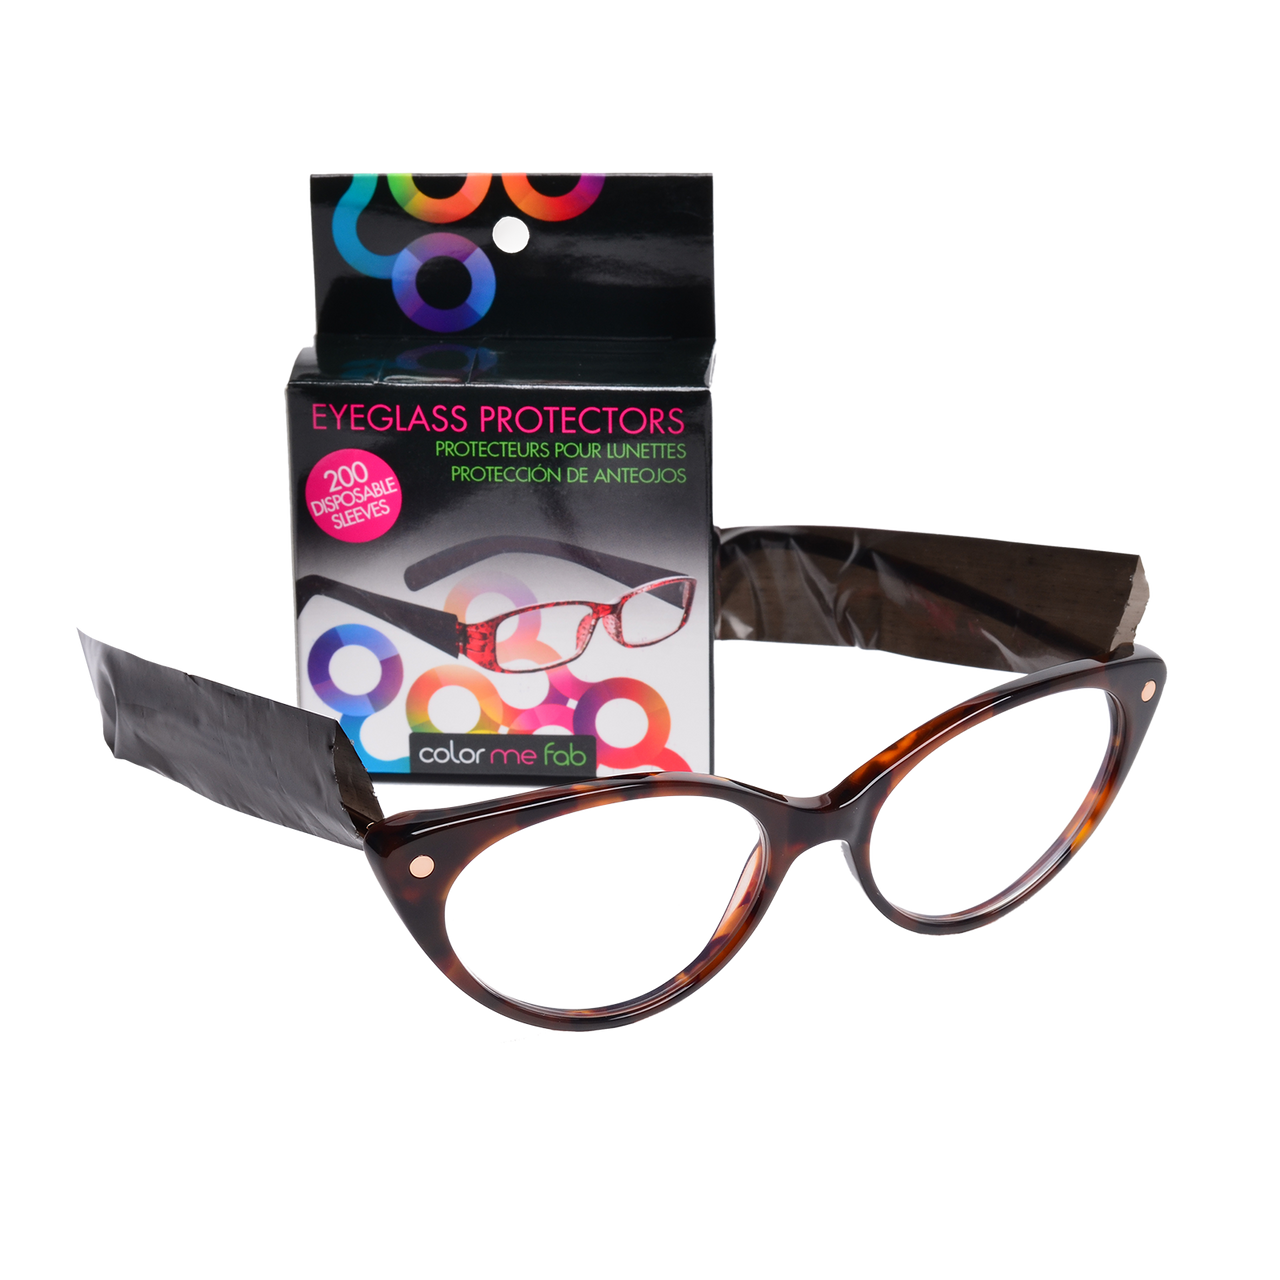 Framar Eye Glass Protectors - 200 count 1 Each